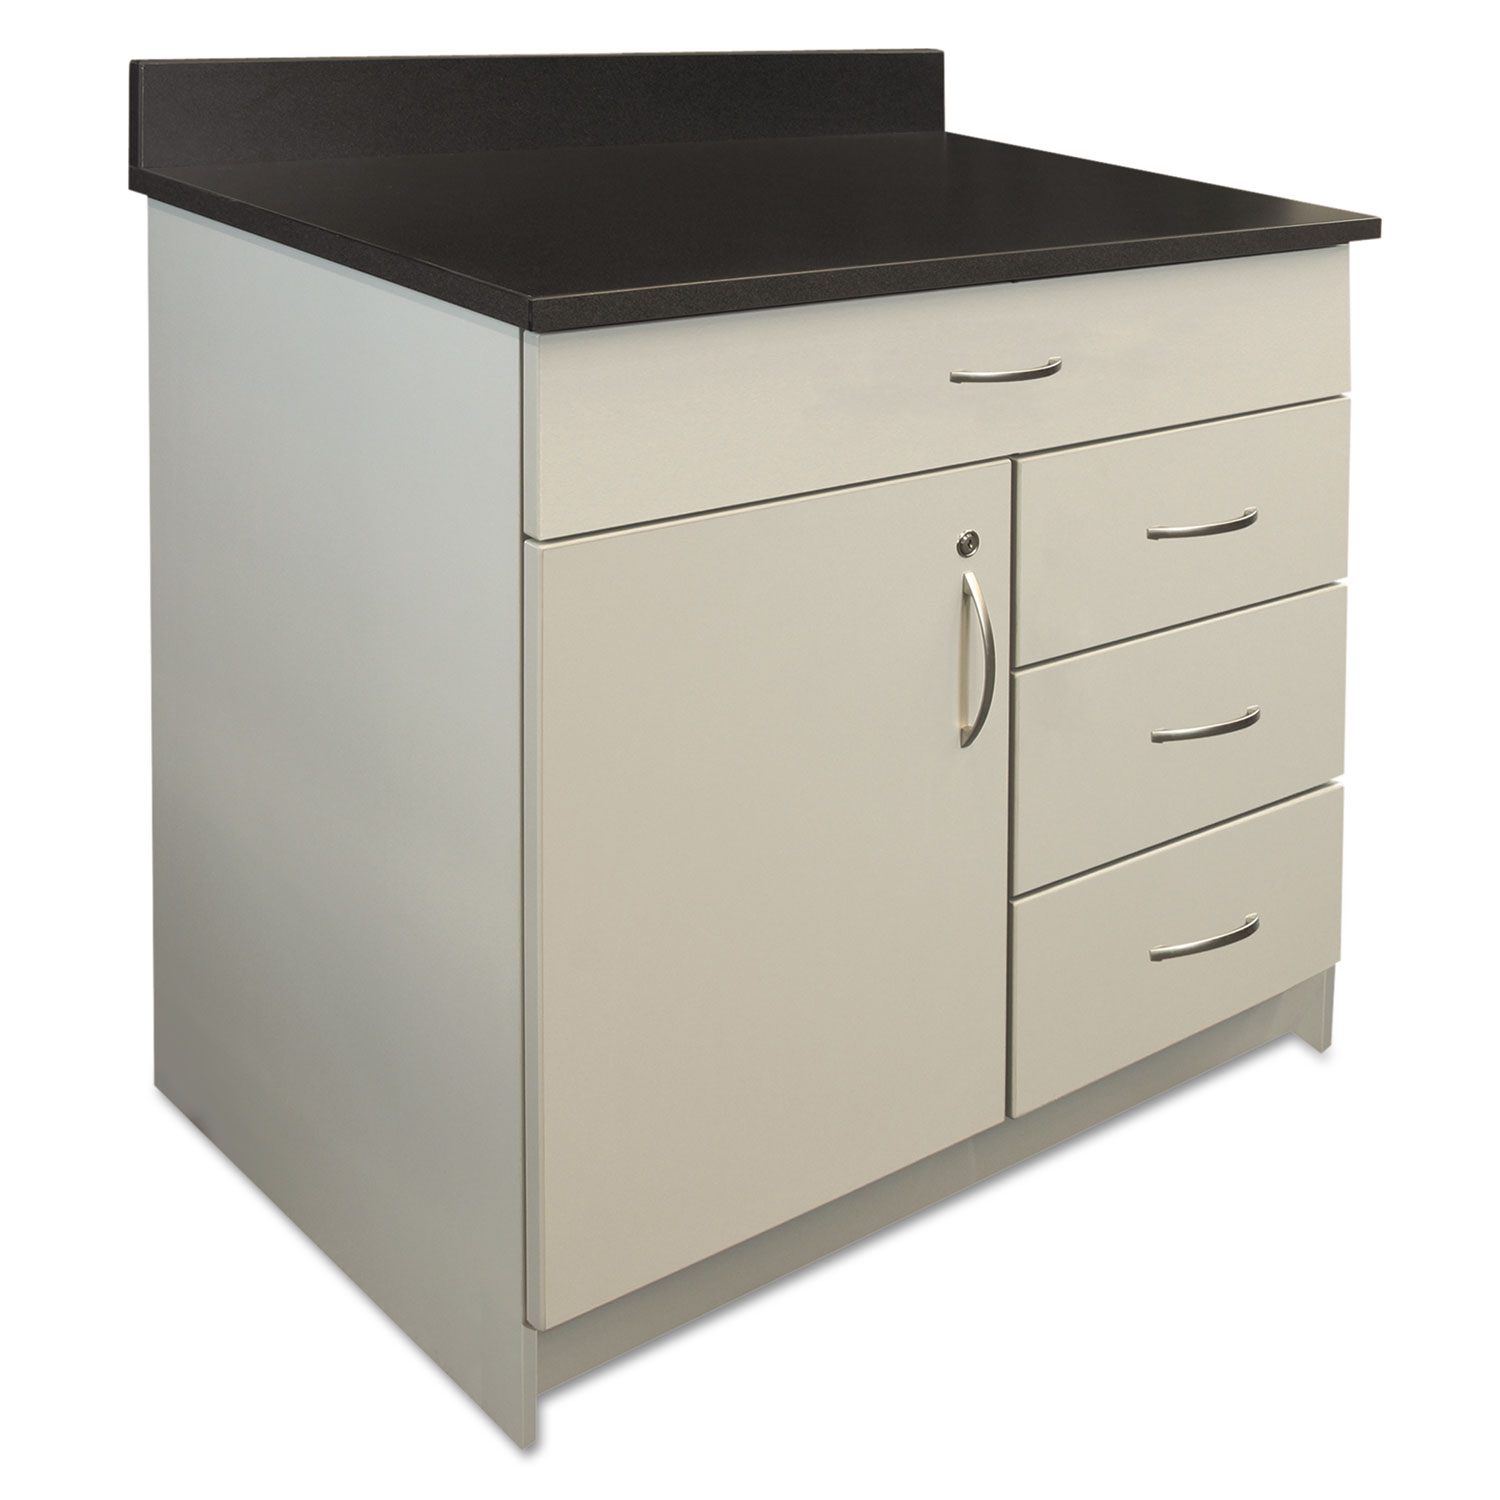 Hosp. Base Cabinet, Four Drawer/Door, 36 x 24 3/4 x 40, Gray/Granite Nebula